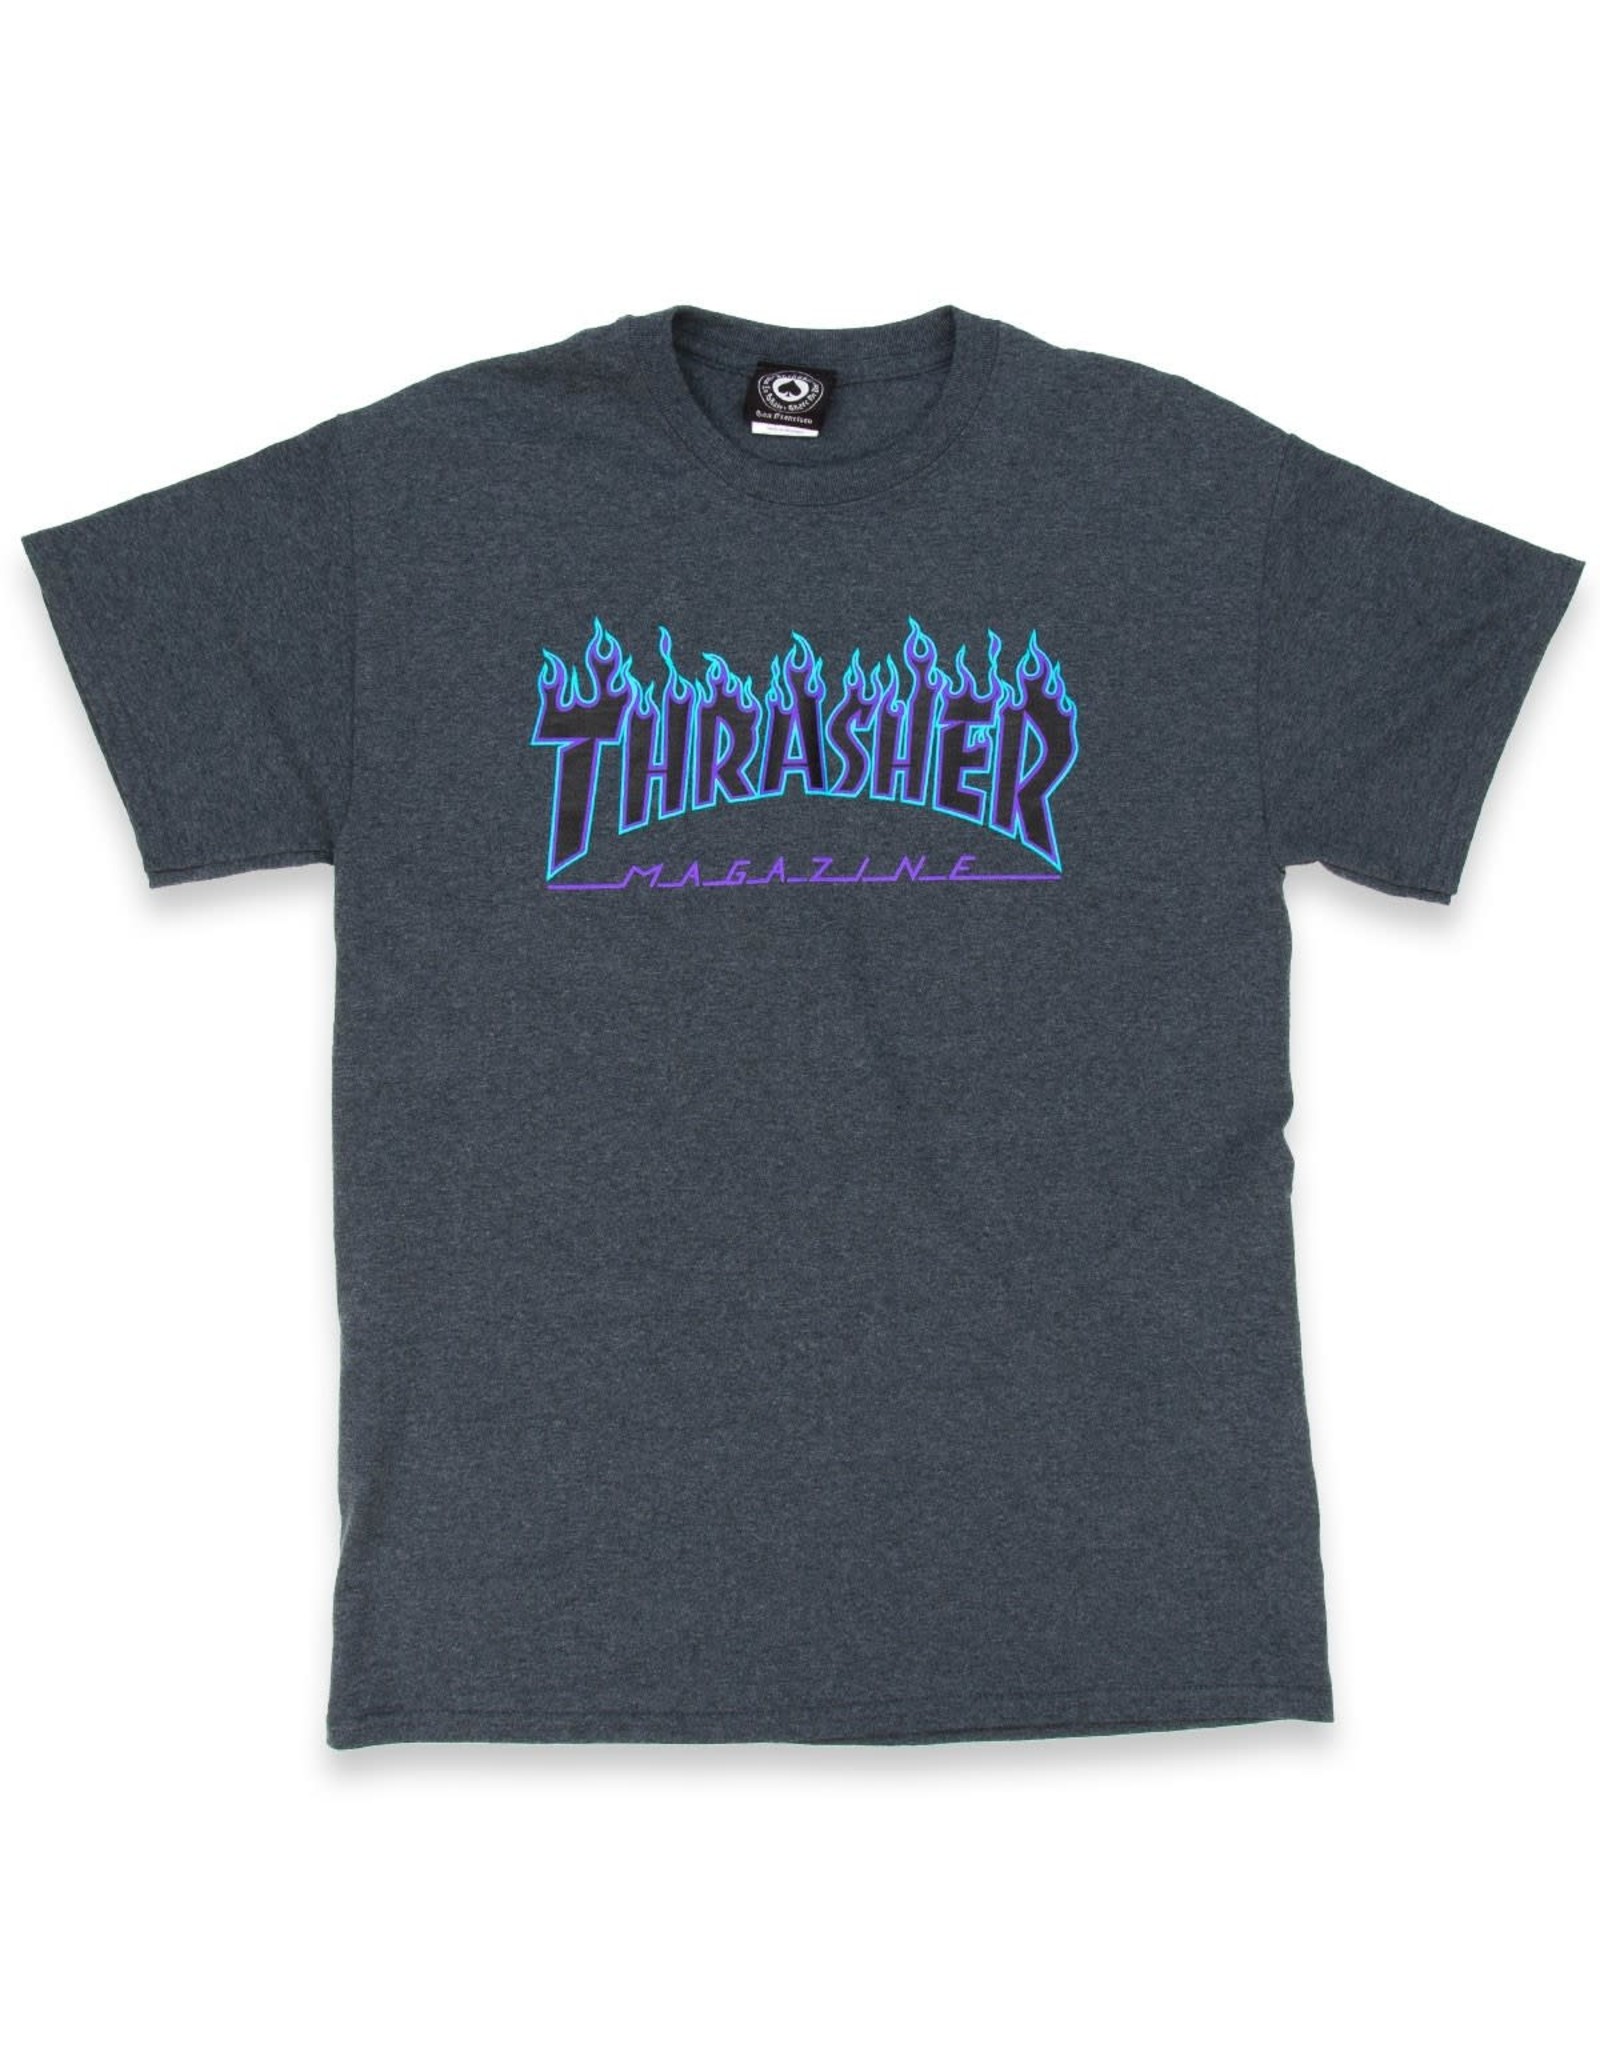 Thrasher Thrasher Tee Mens Flame Logo S/S (Dark Heather)